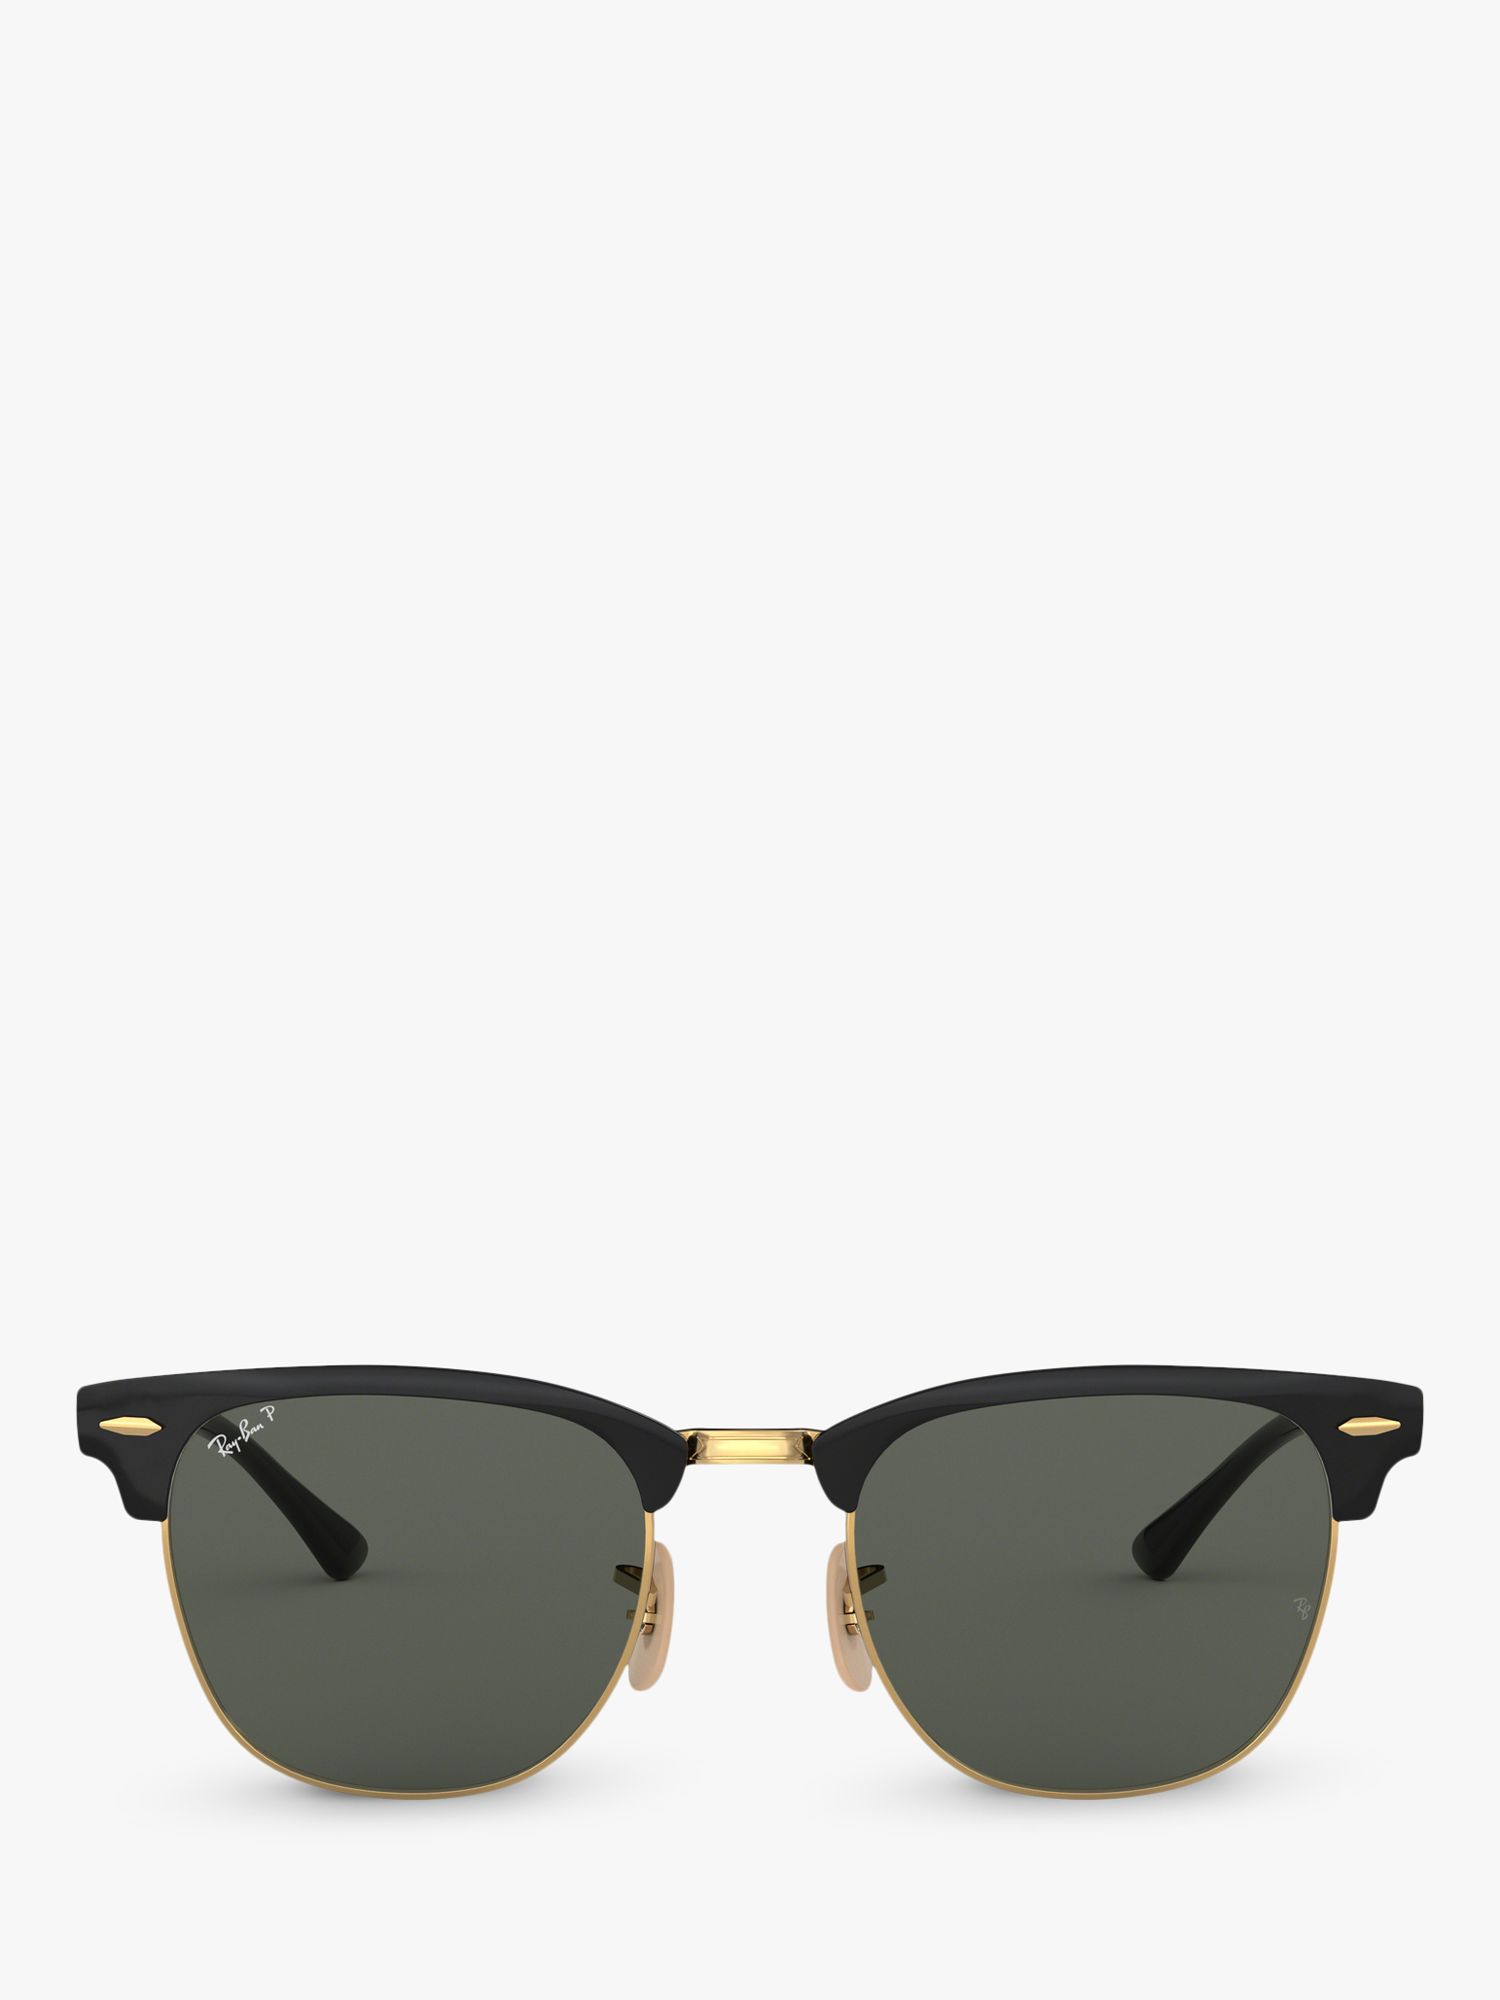 Ray-Ban RB3716 Unisex Square Polarised Sunglasses, Black/Gold at John ...